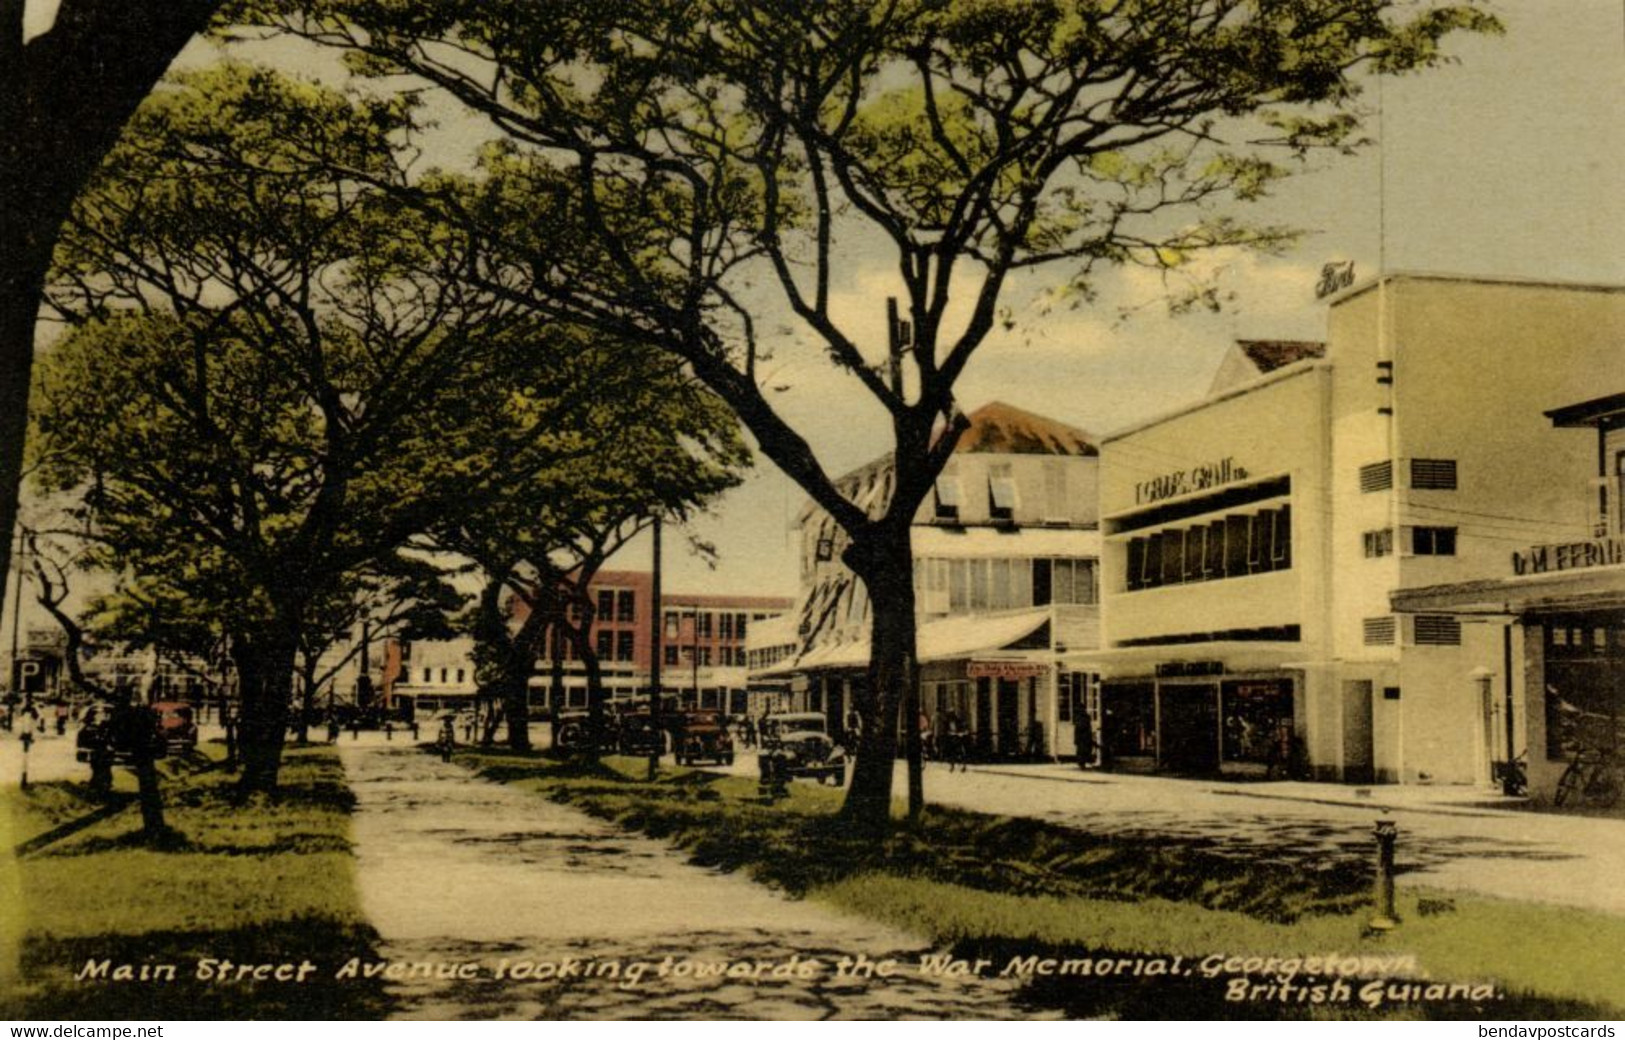 British Guiana, Guyana, Demerara, GEORGETOWN, Main Street Avenue (1950s) Postcard - Guyana (formerly British Guyana)